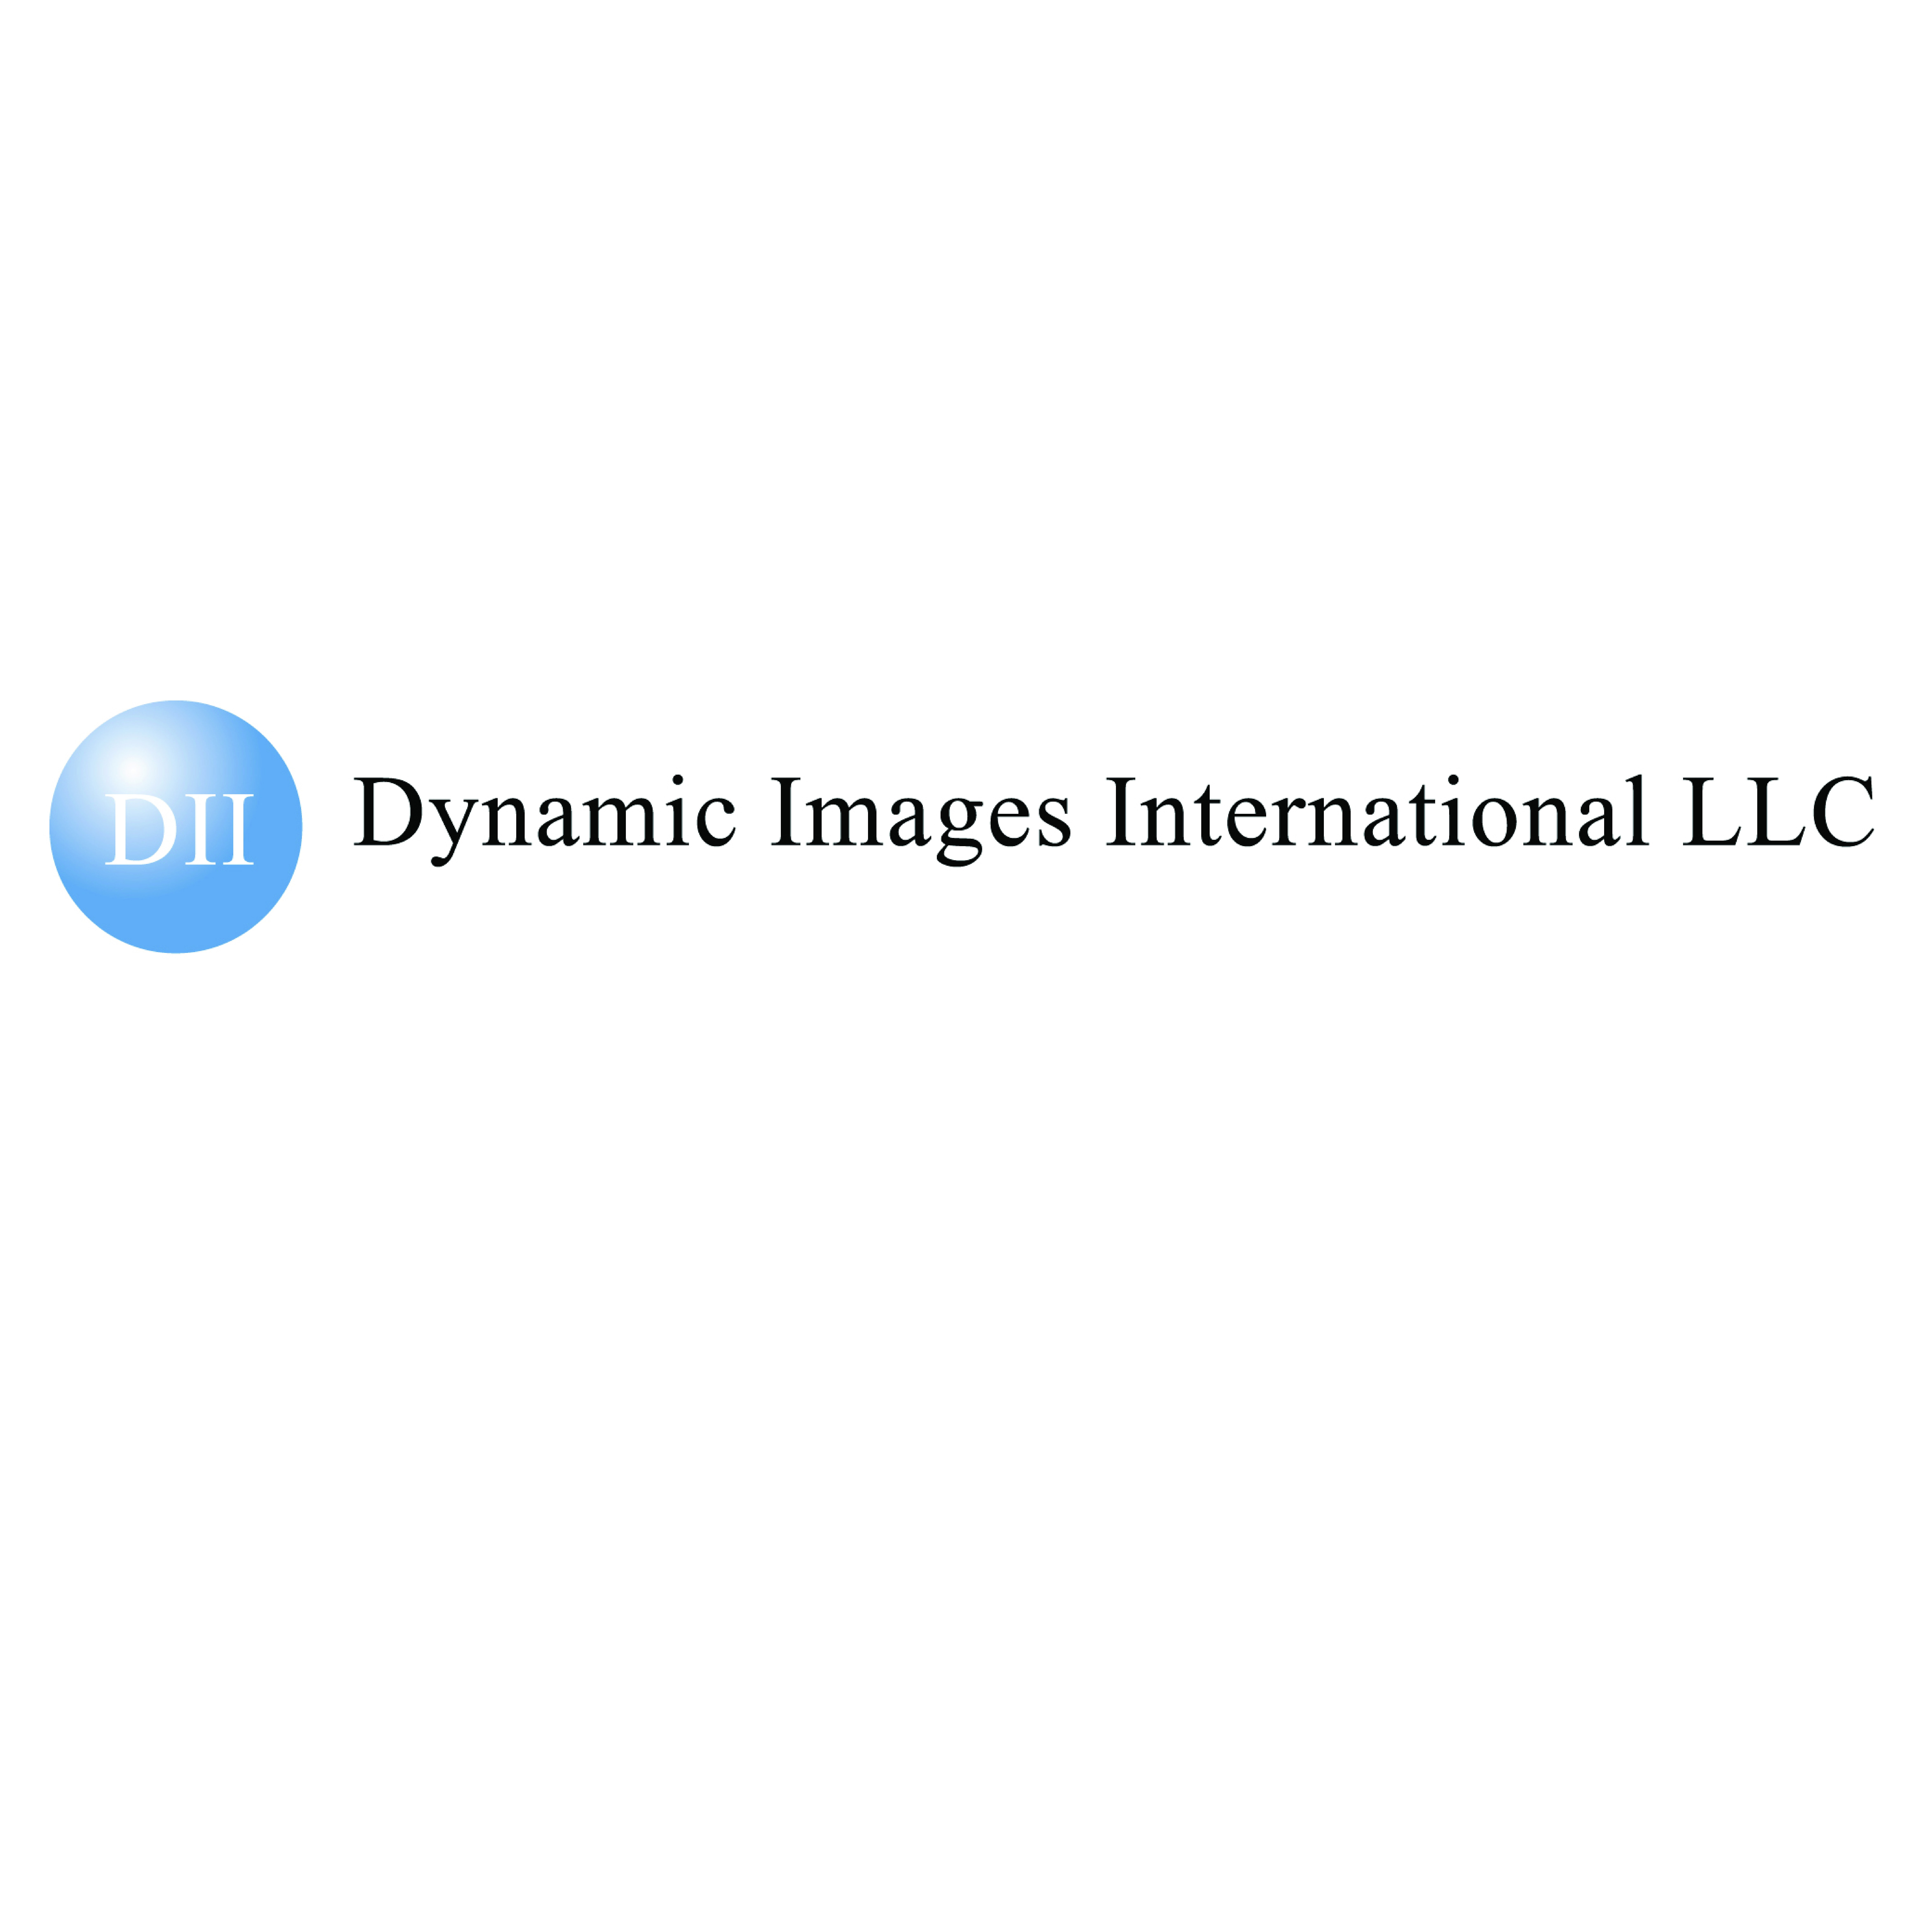 Dynamic Images International LLC